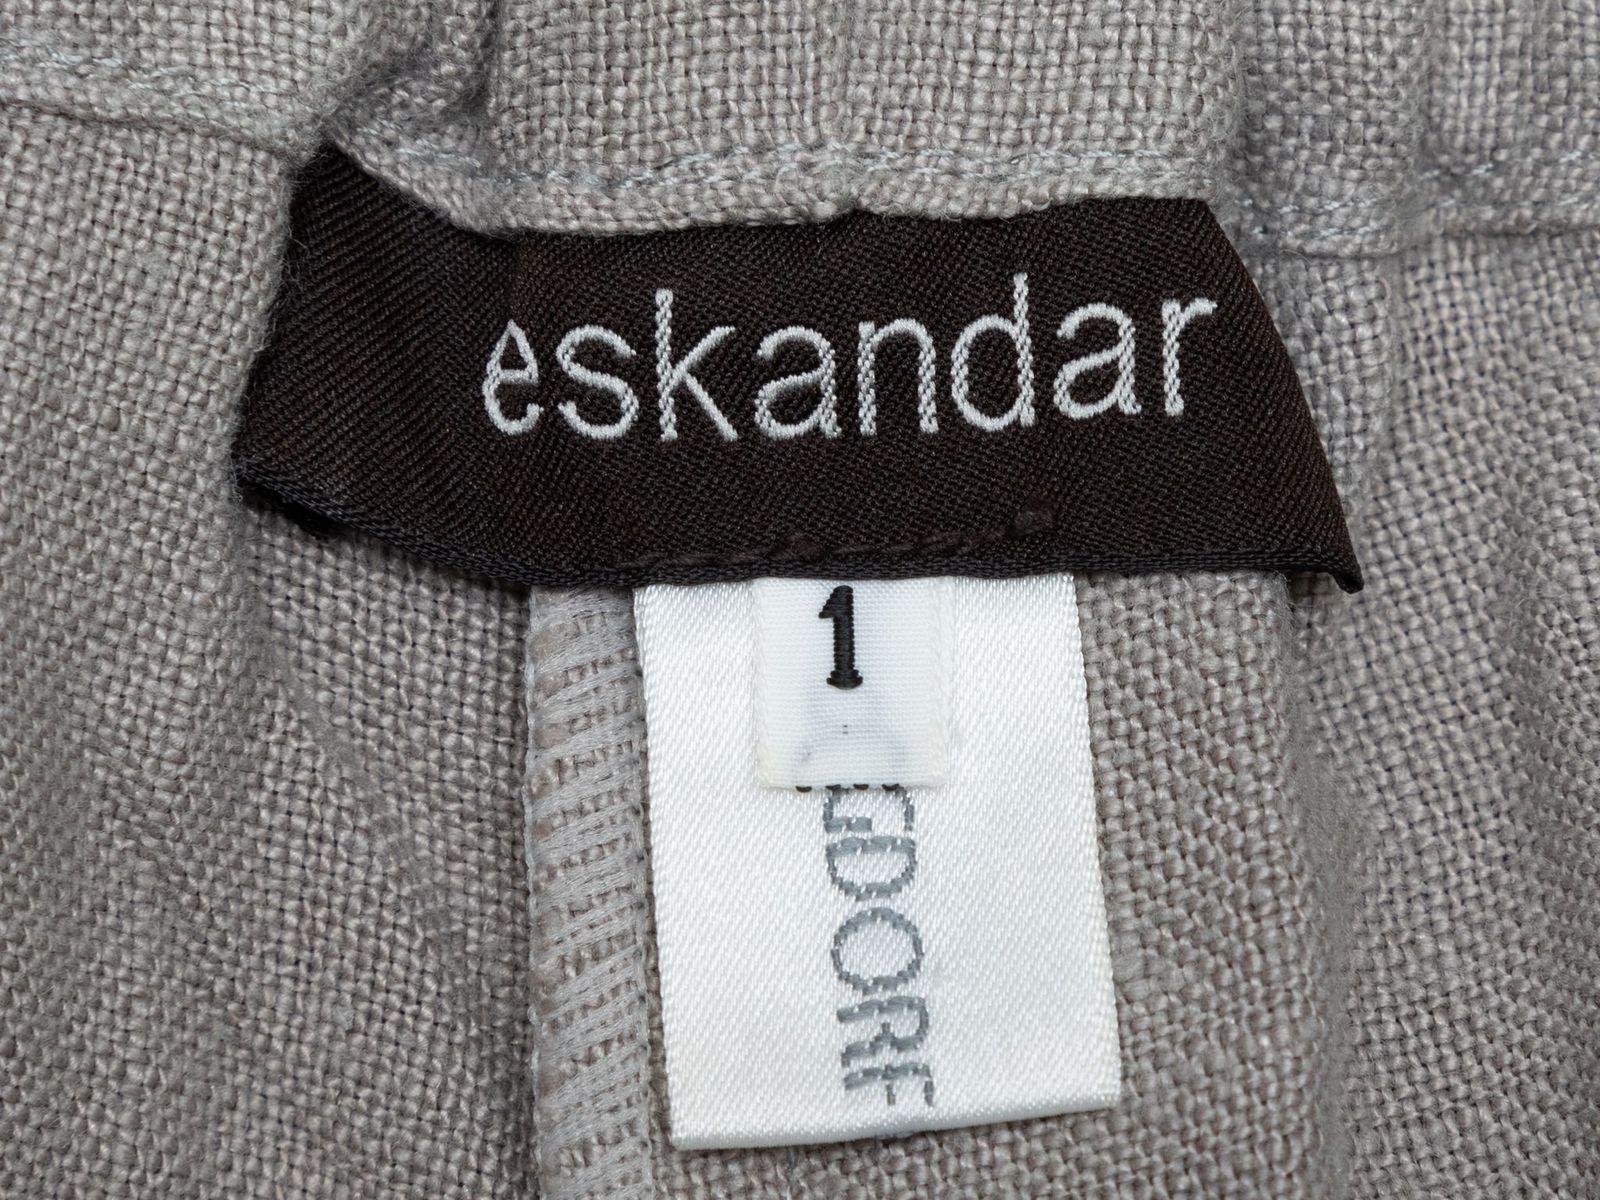 Product Details: Taupe wide-leg linen pants by Eskandar. Elasticized waistband at back. Front button closure. Designer size 1. 30